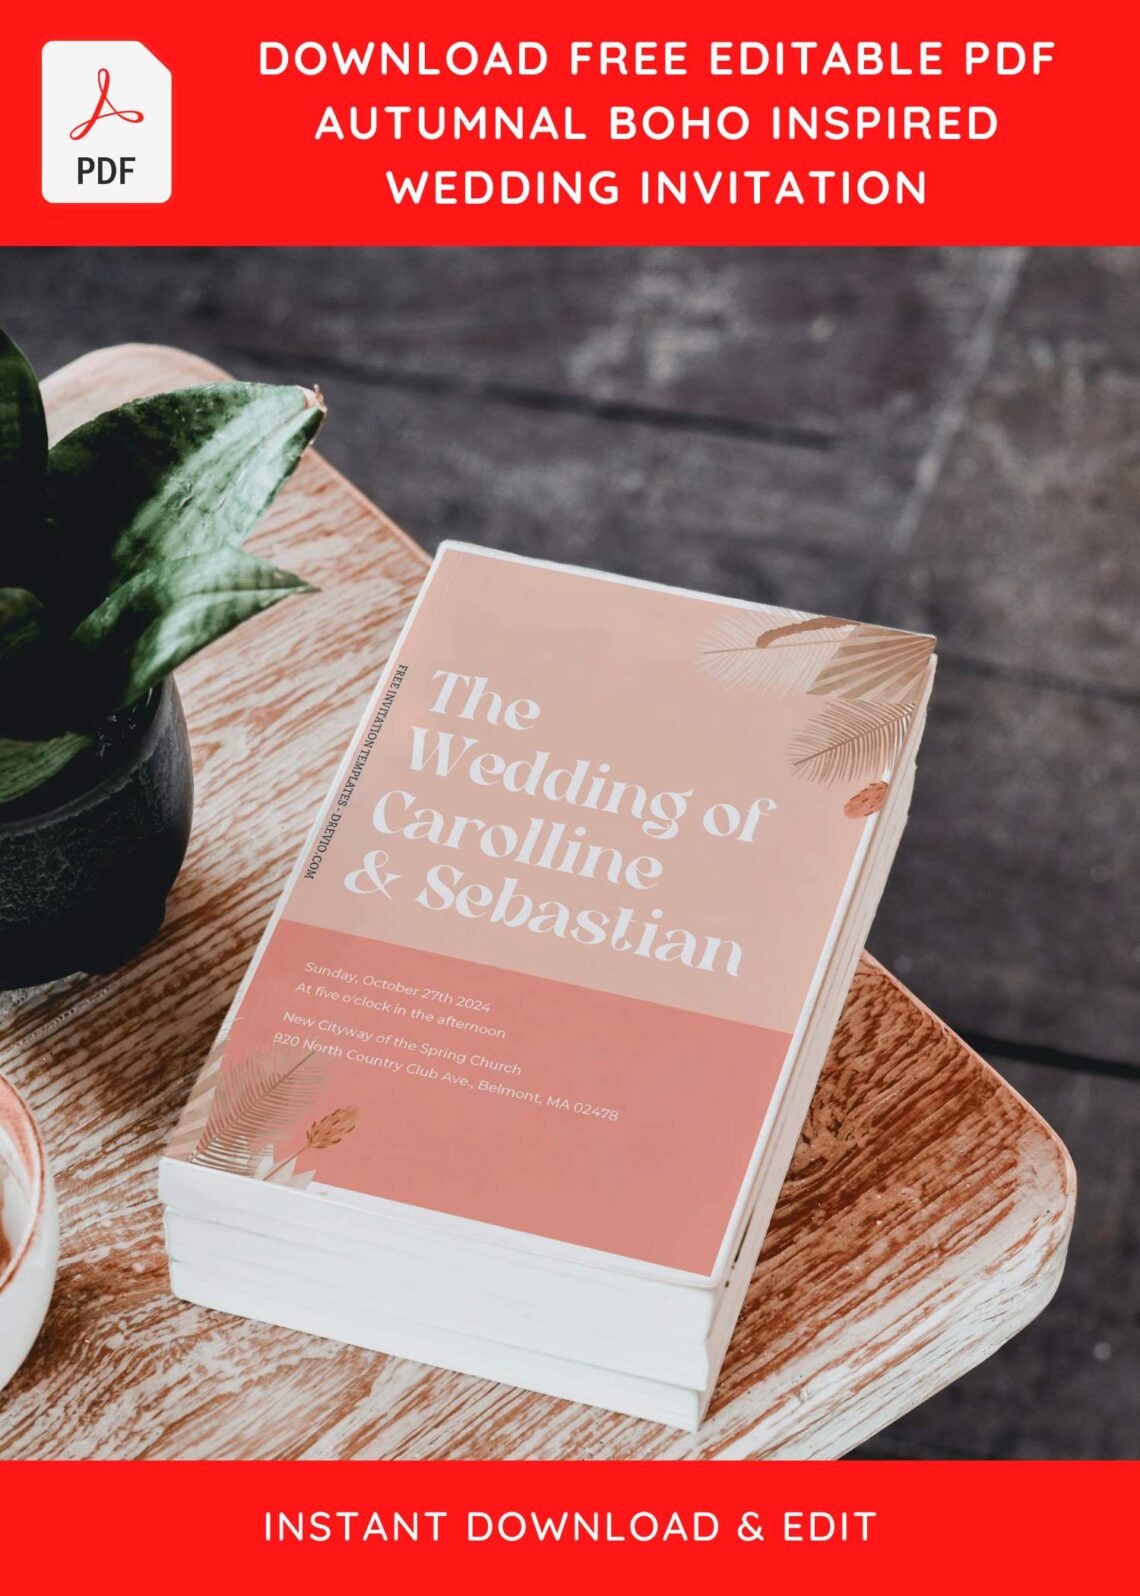 (Free Editable PDF) Dreamy Modern Boho Wedding Invitation Templates with editable text